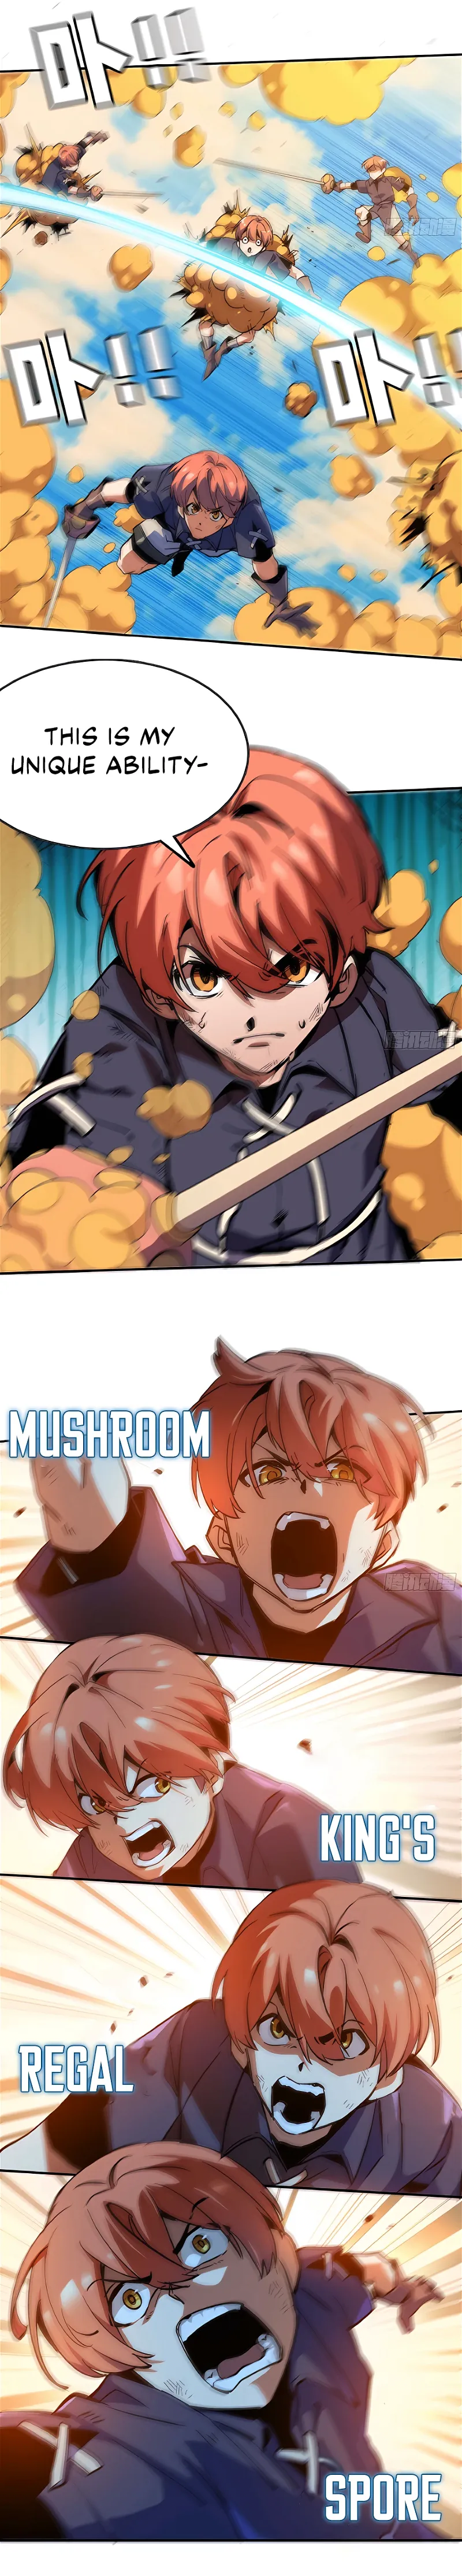 Mushroom Hero Chapter 89 page 10